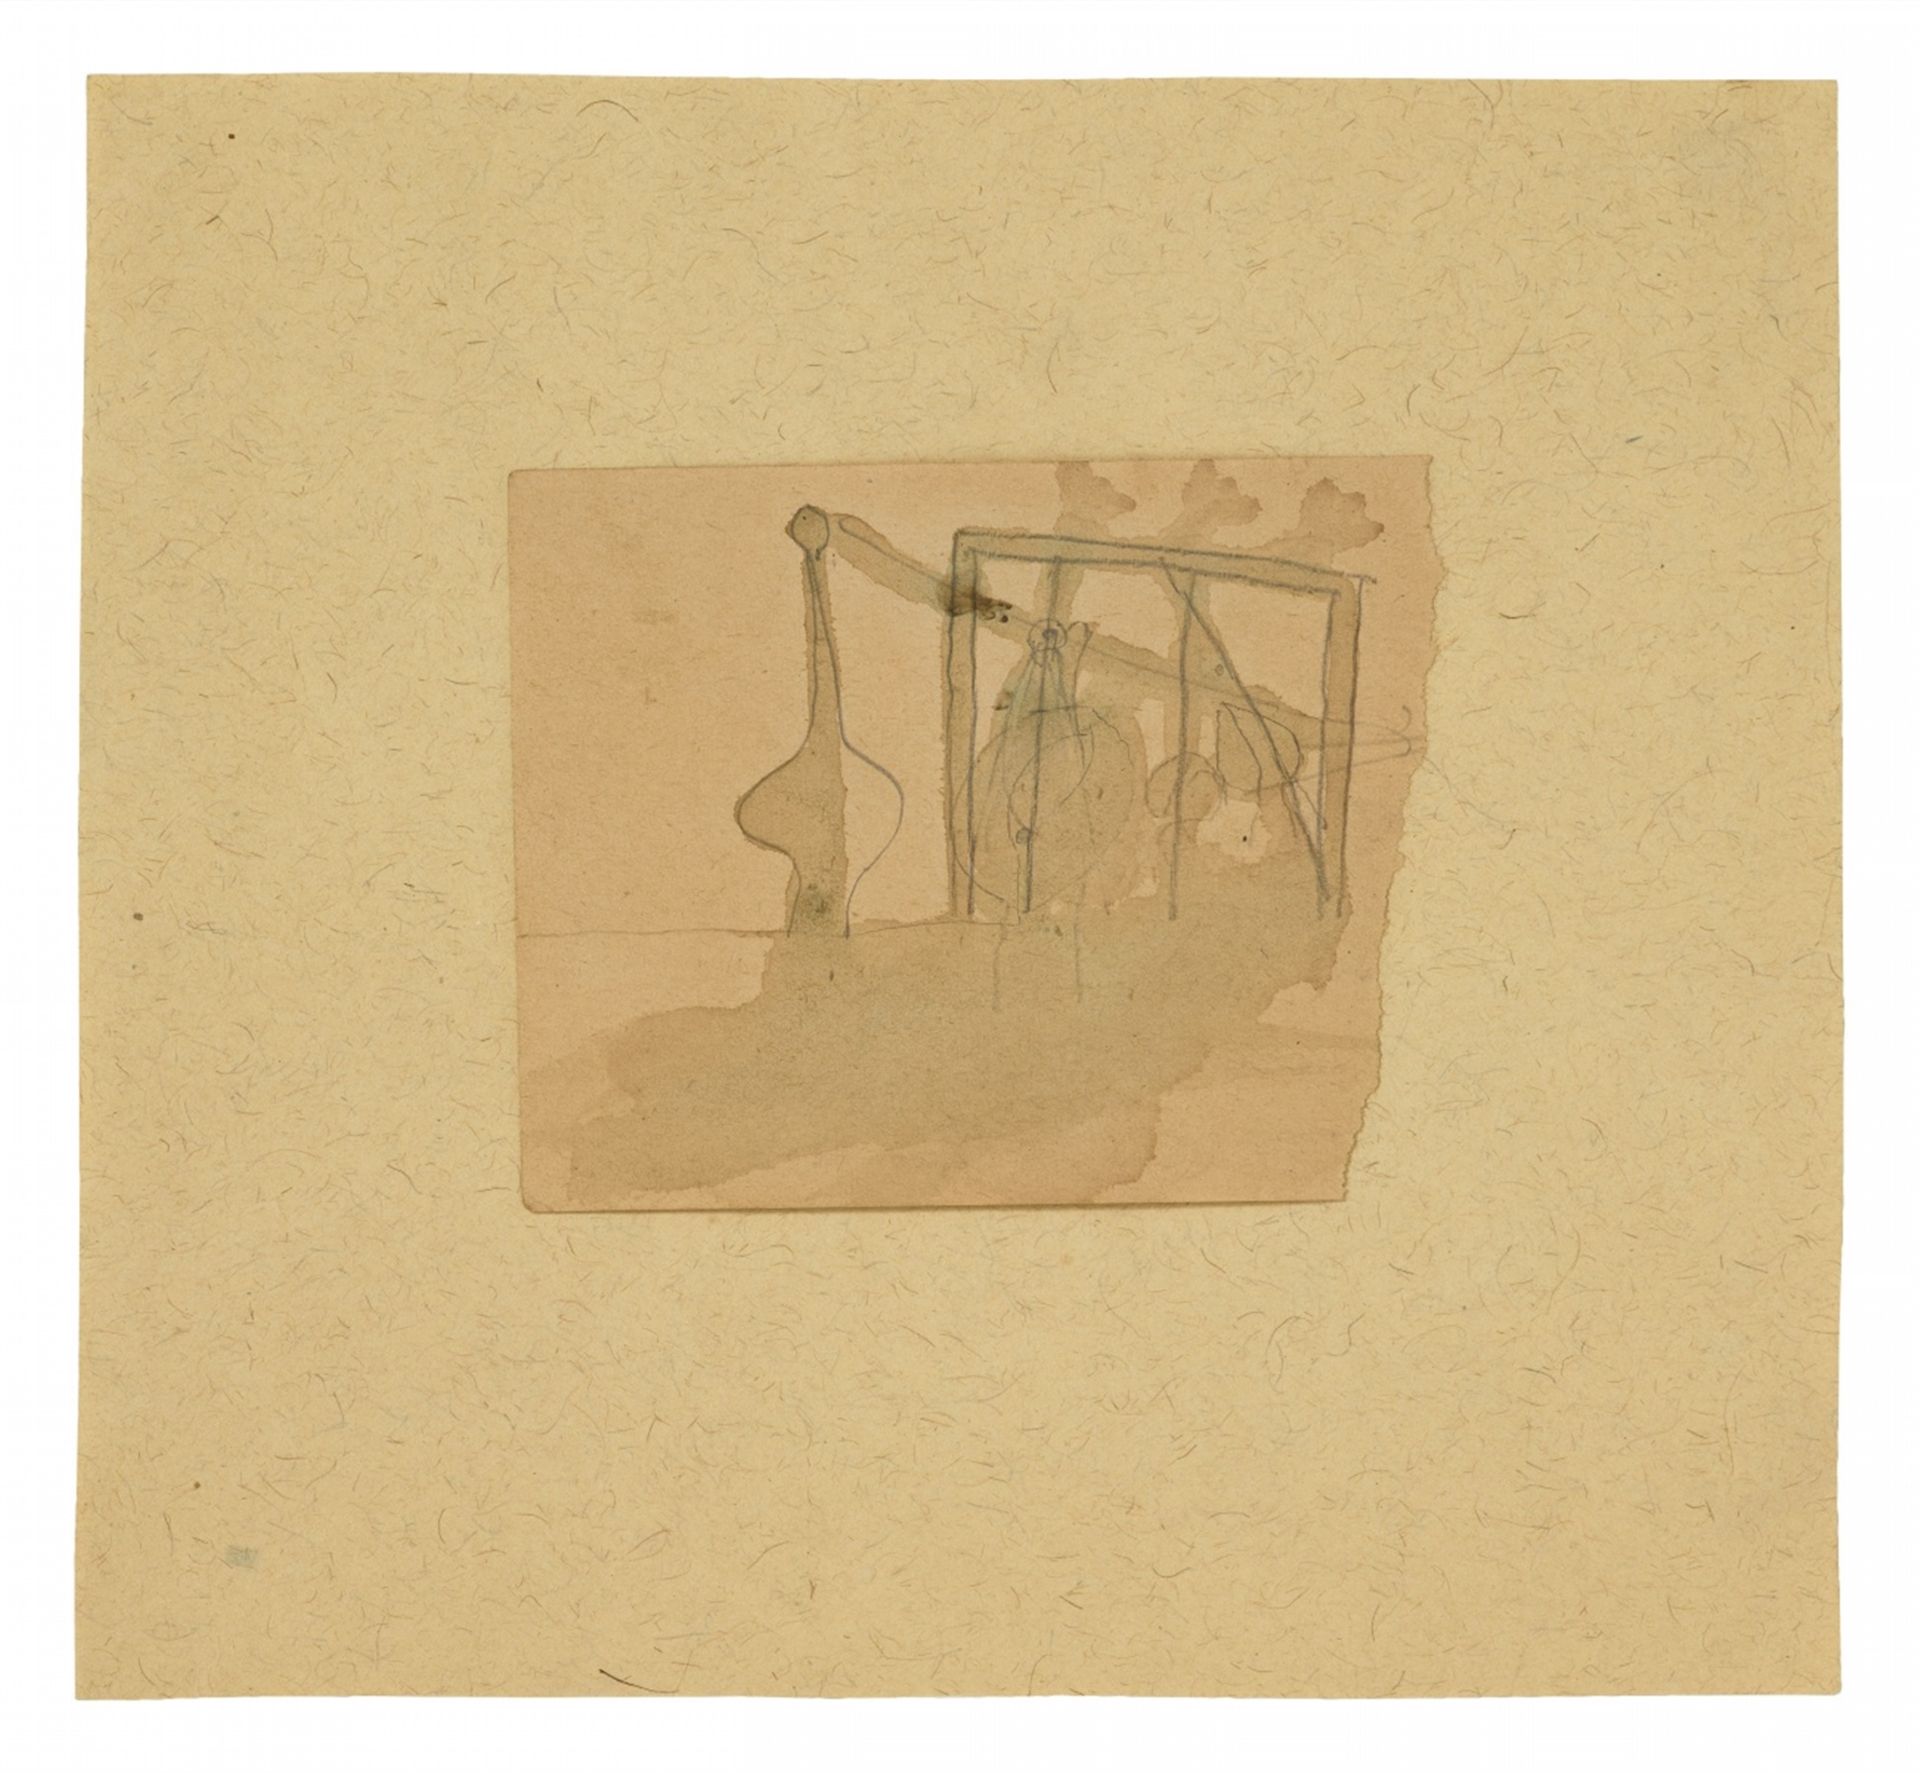 Joseph BeuysChlorophyll-Labor